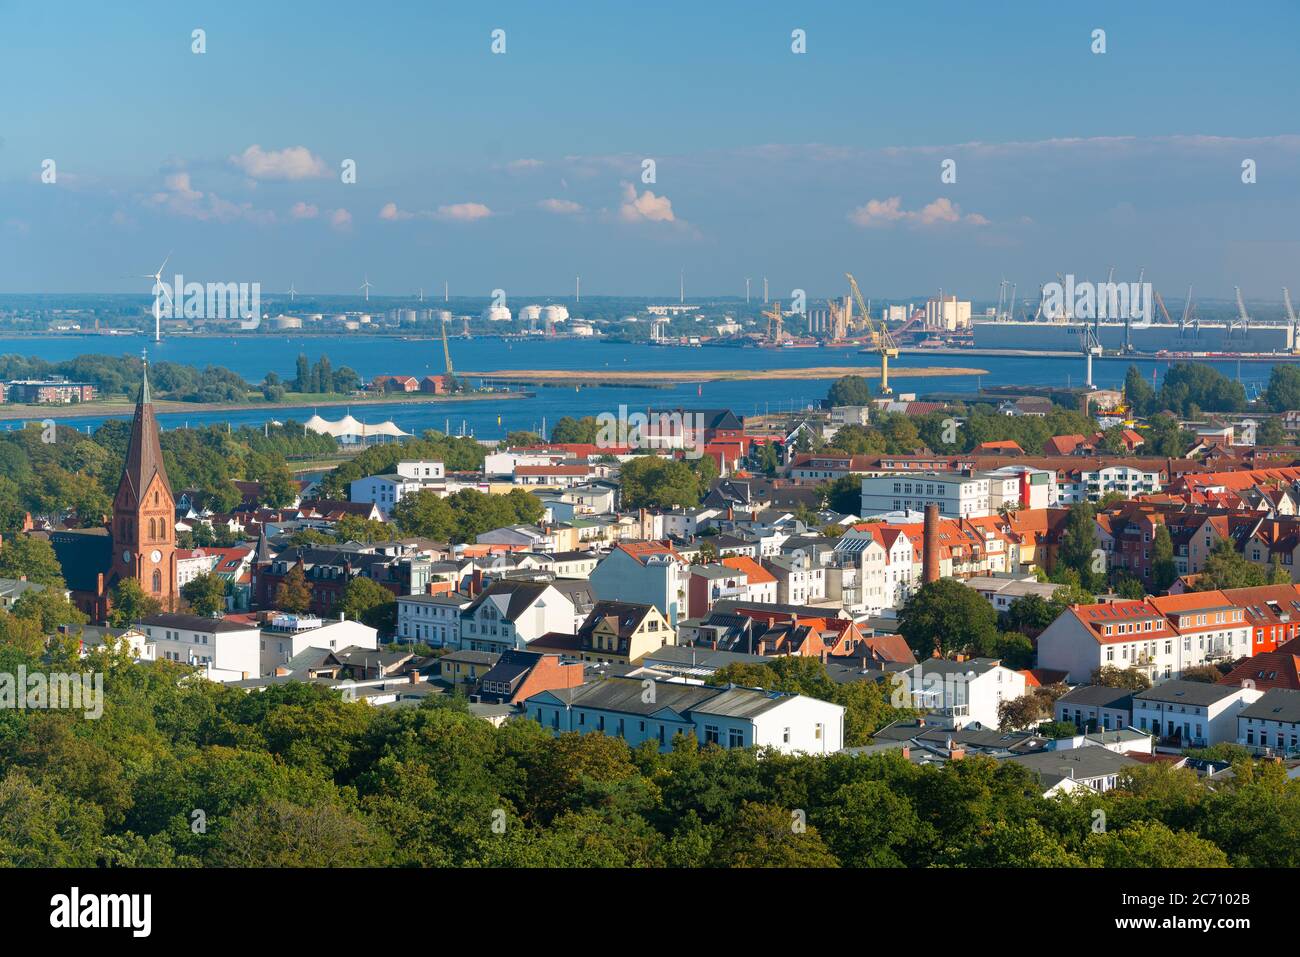 Warnemunde, Allemagne paysage urbain sur la mer Baltique. Banque D'Images